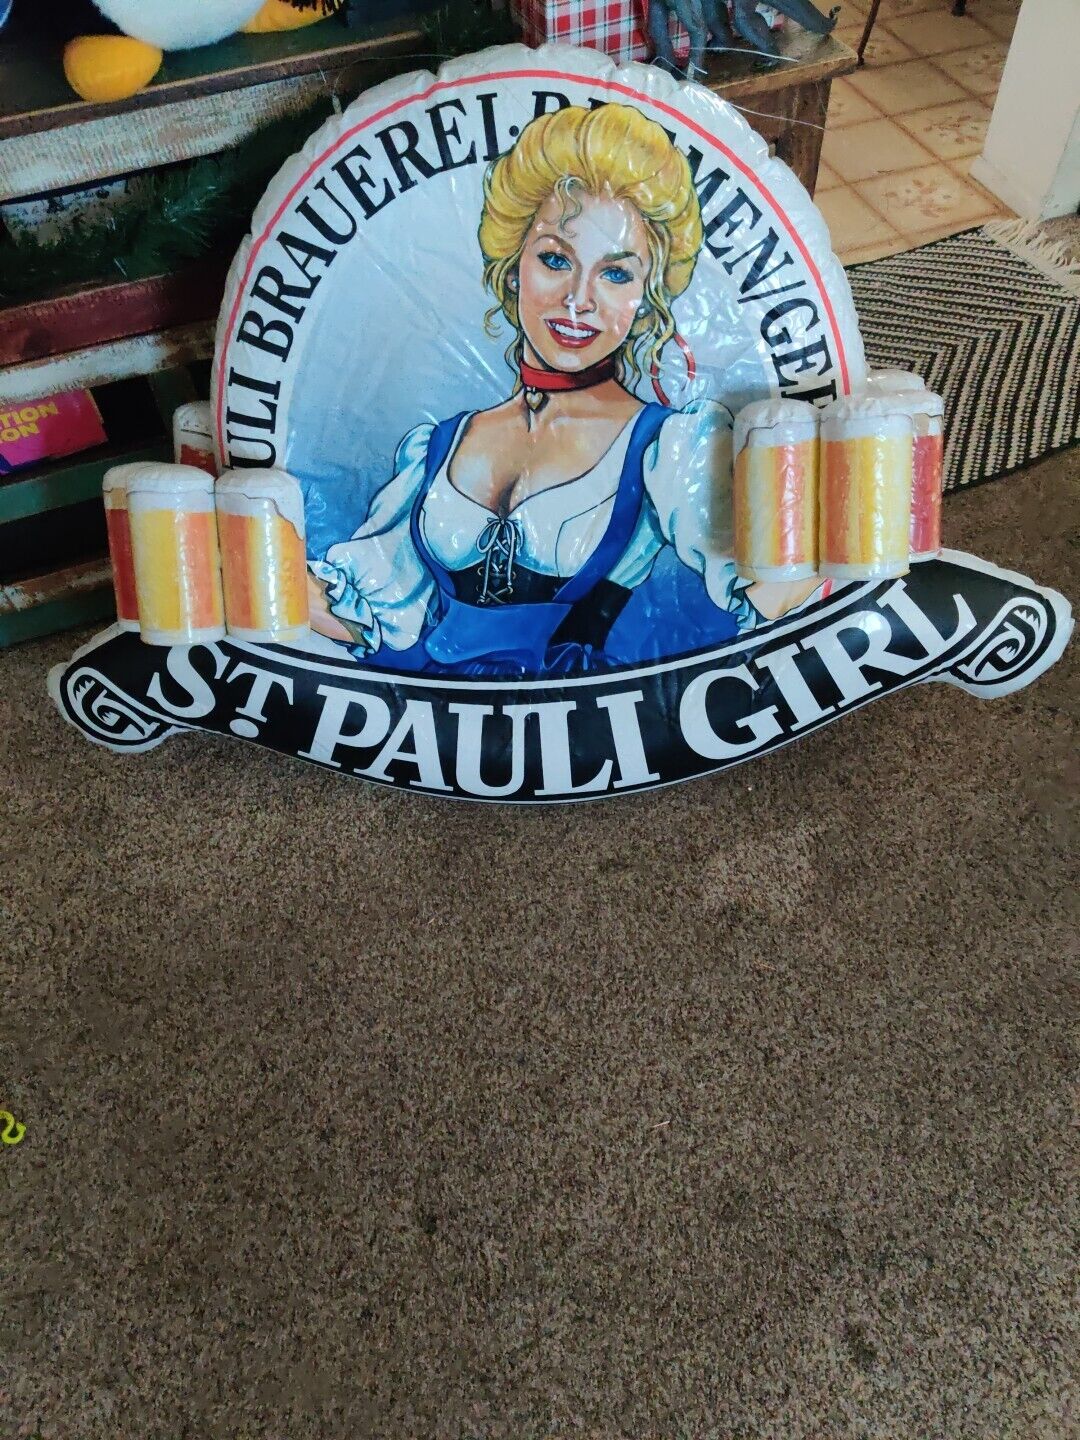 ST. PAULI GIRL BEER MUGS ADVERTISING HANGING INFLATABLE GERMAN 3' X 4' 3D 